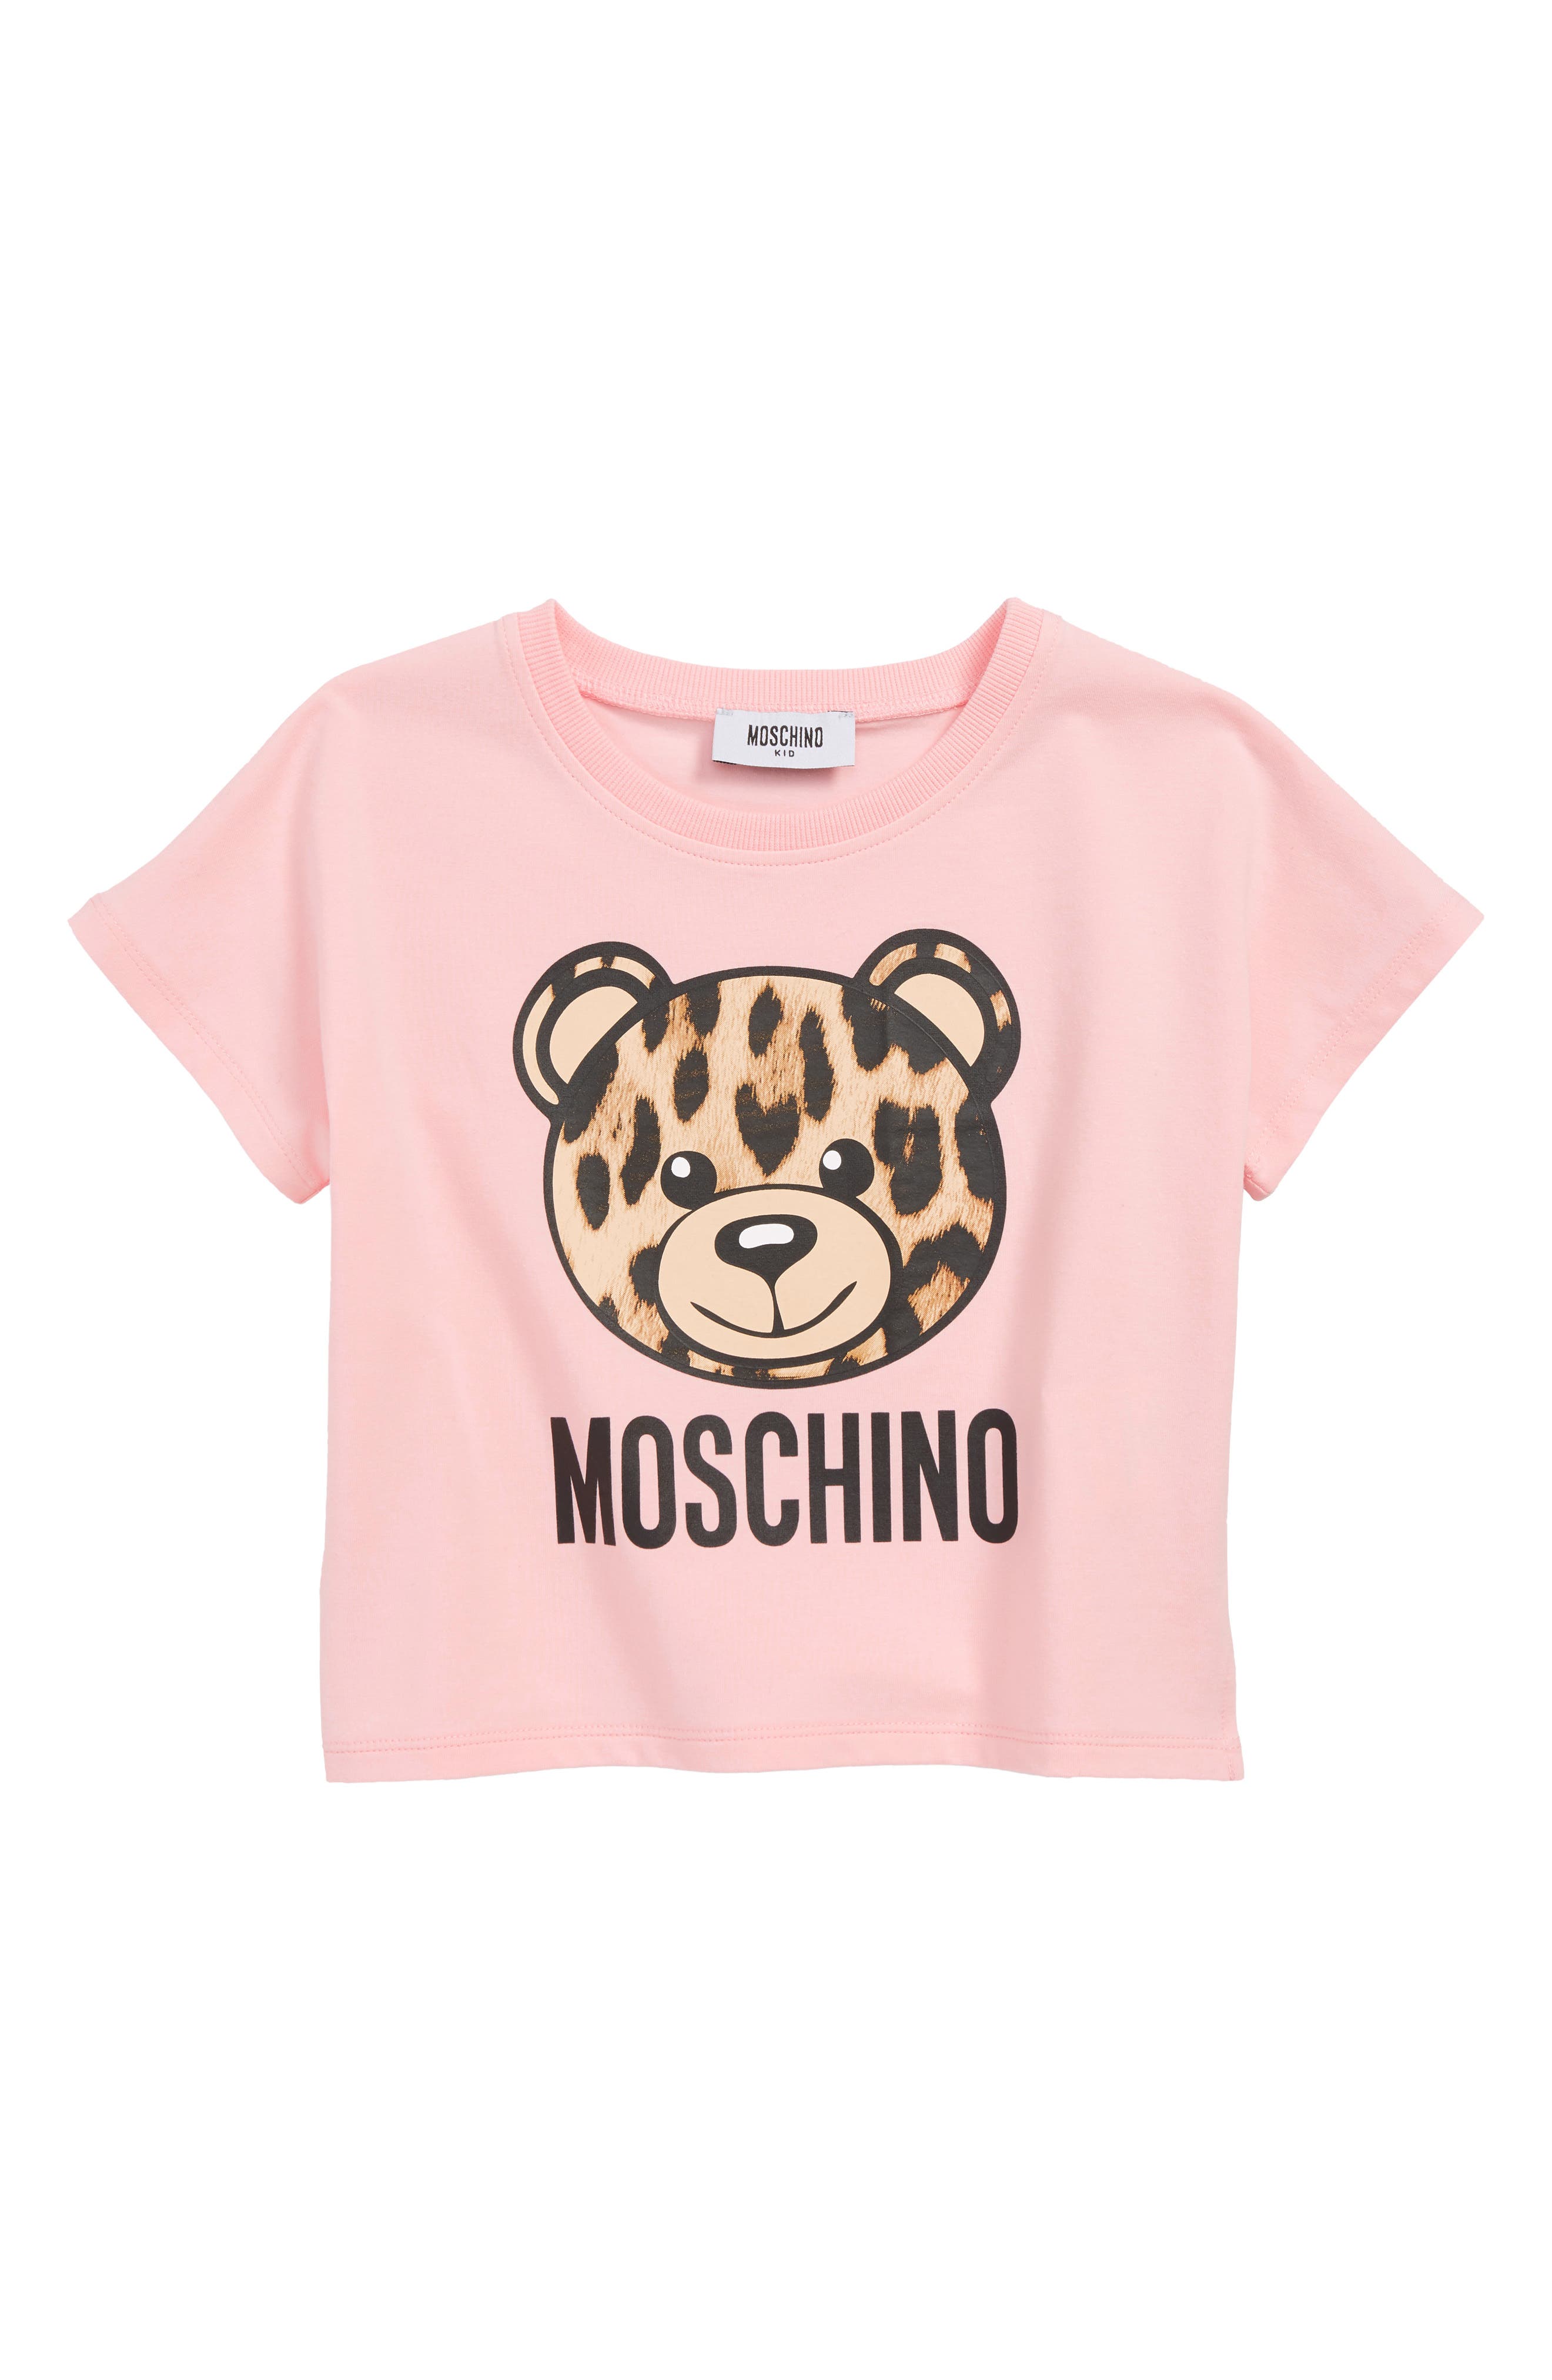 moschino leopard shirt